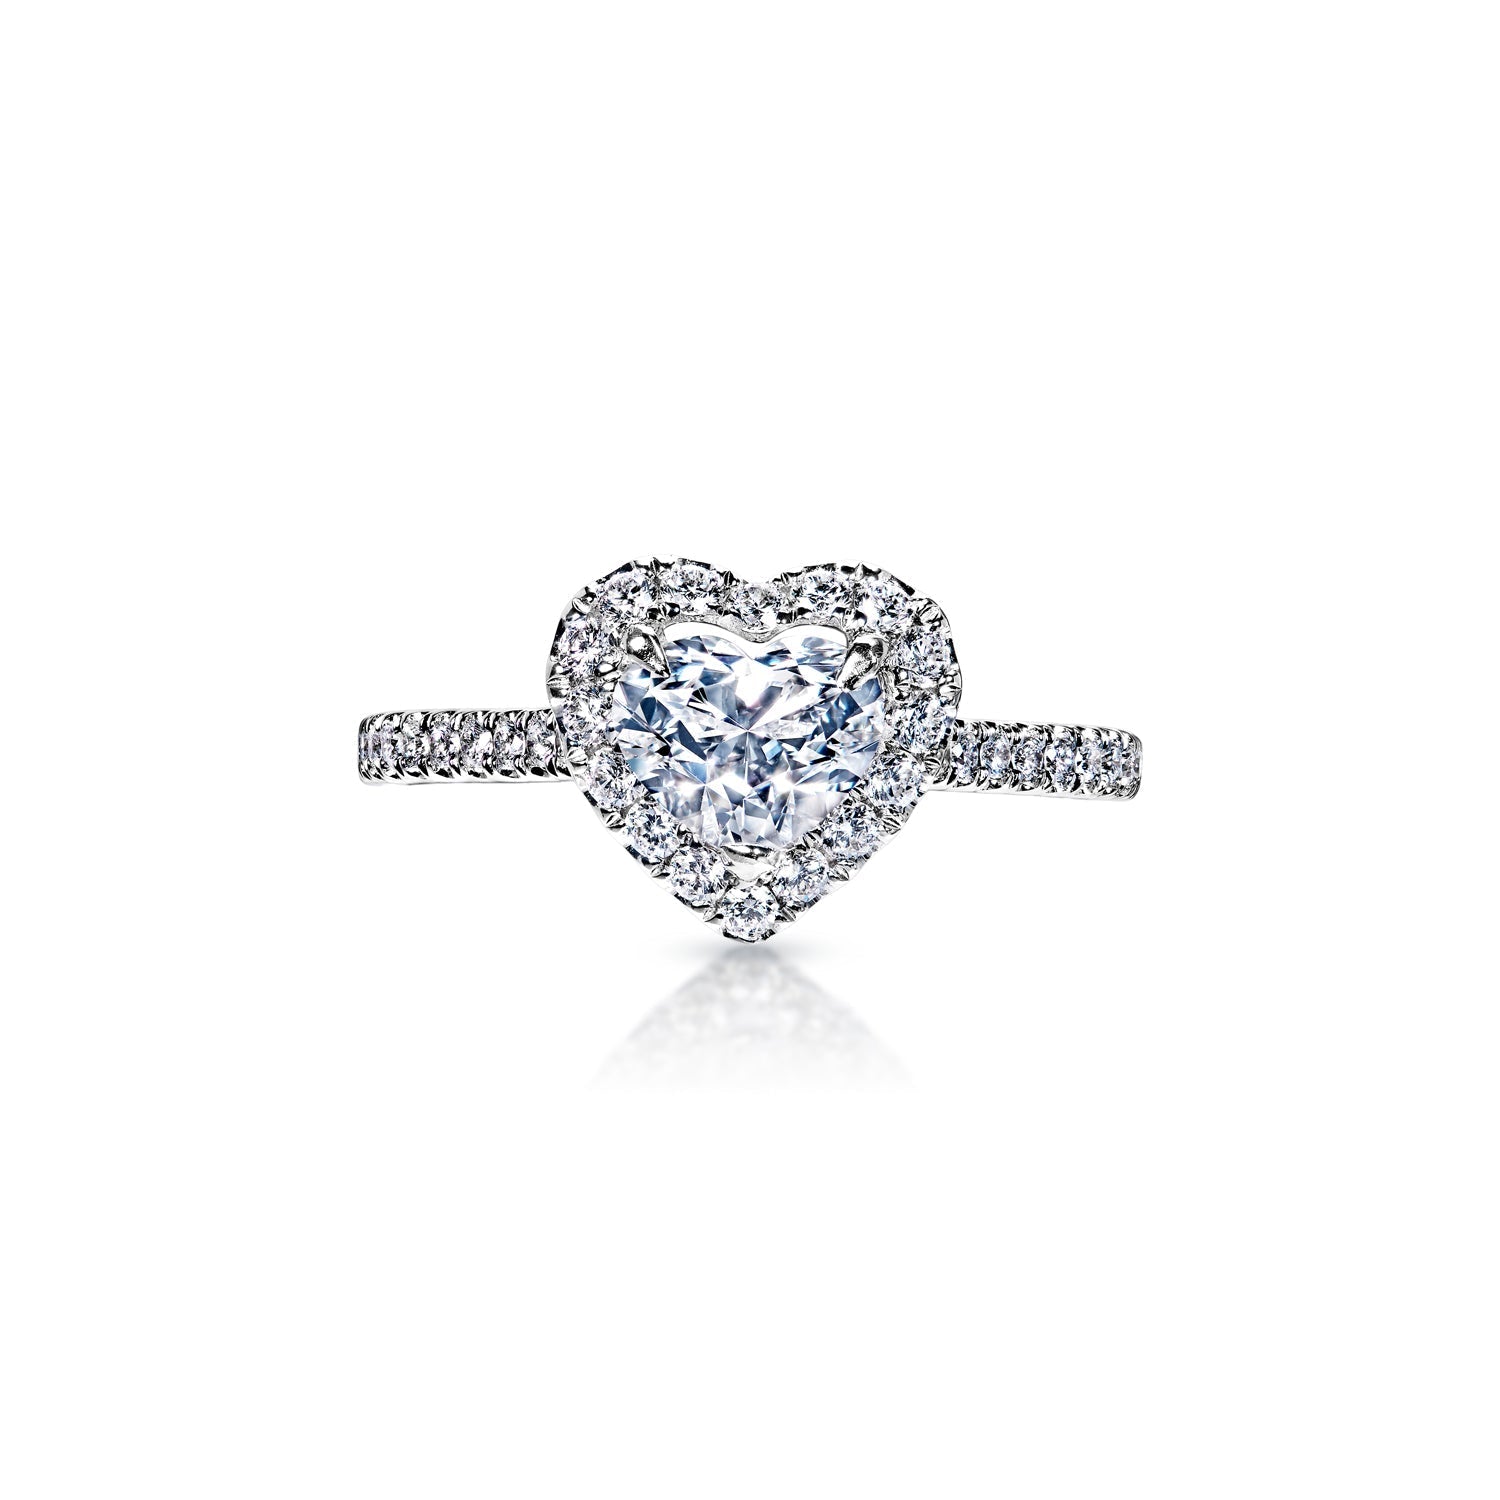 Teagan 1 Carat E VVS2 Heart Shape Diamond Engagement Ring in 18k White Gold Front View